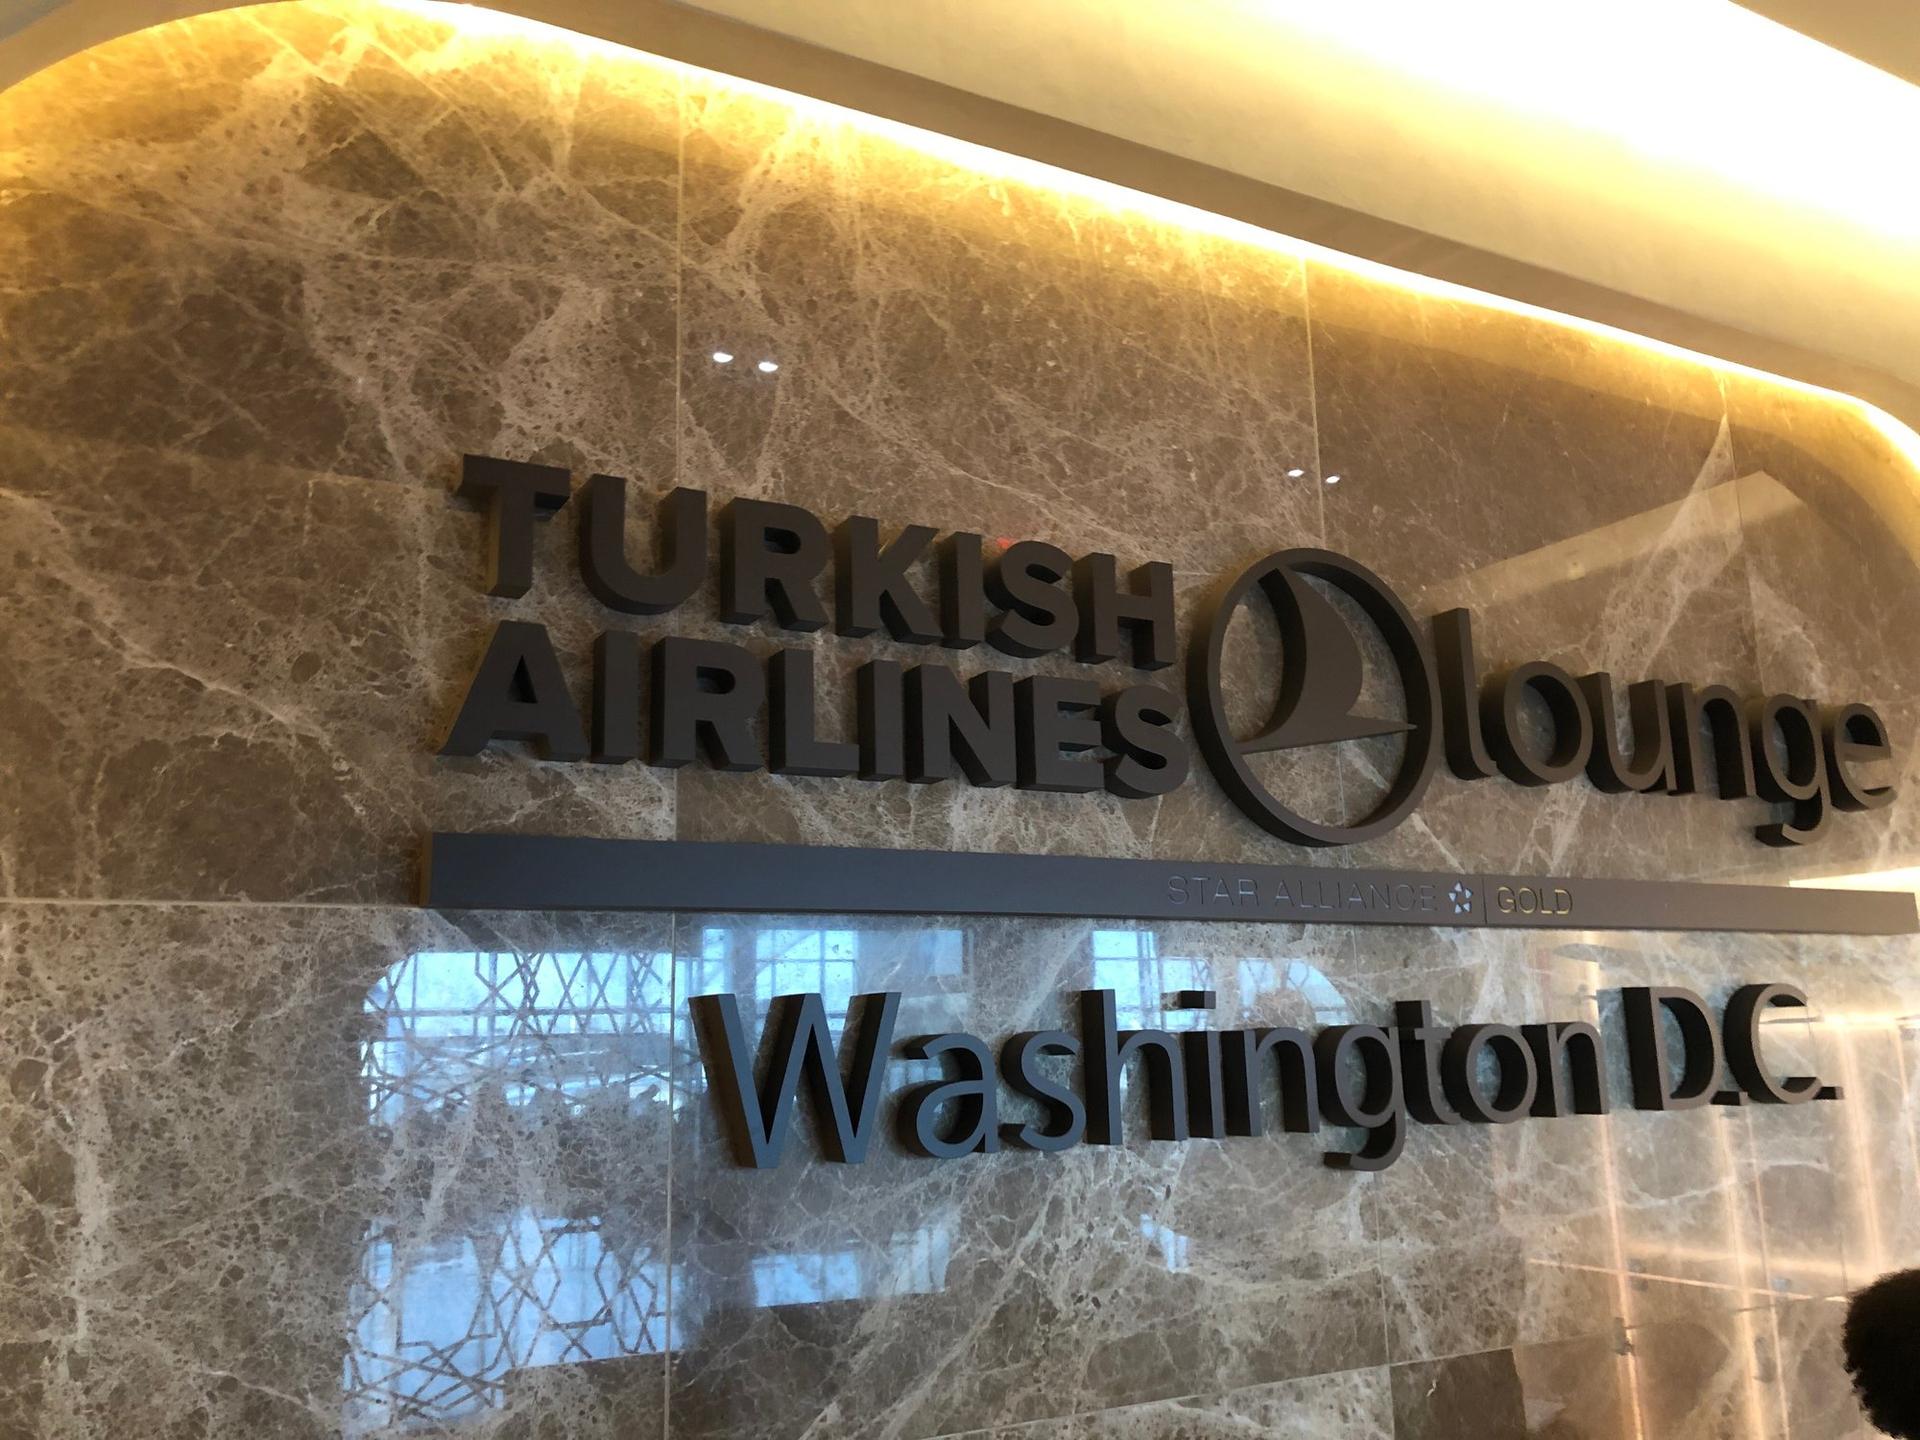 Turkish Airlines Lounge Washington D.C. image 88 of 100